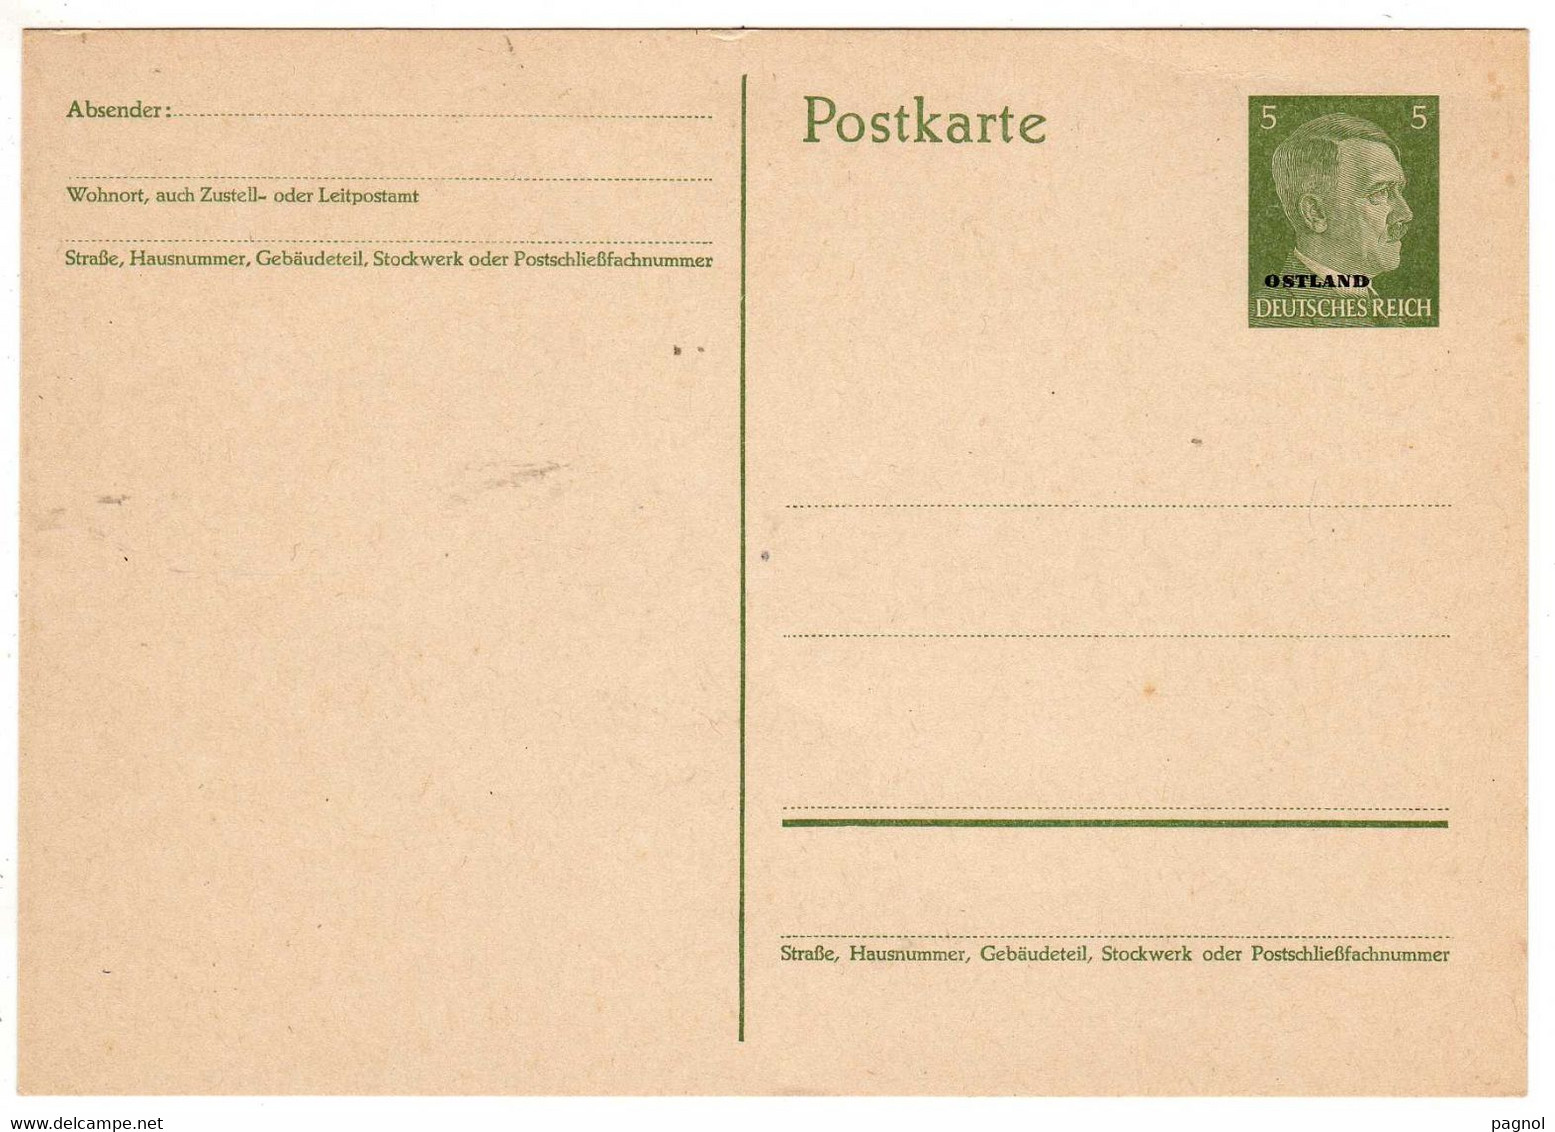 Pays Baltes : Ostland : Entiers Postaux : Occupation Allemagne 1942 - Sonstige - Europa